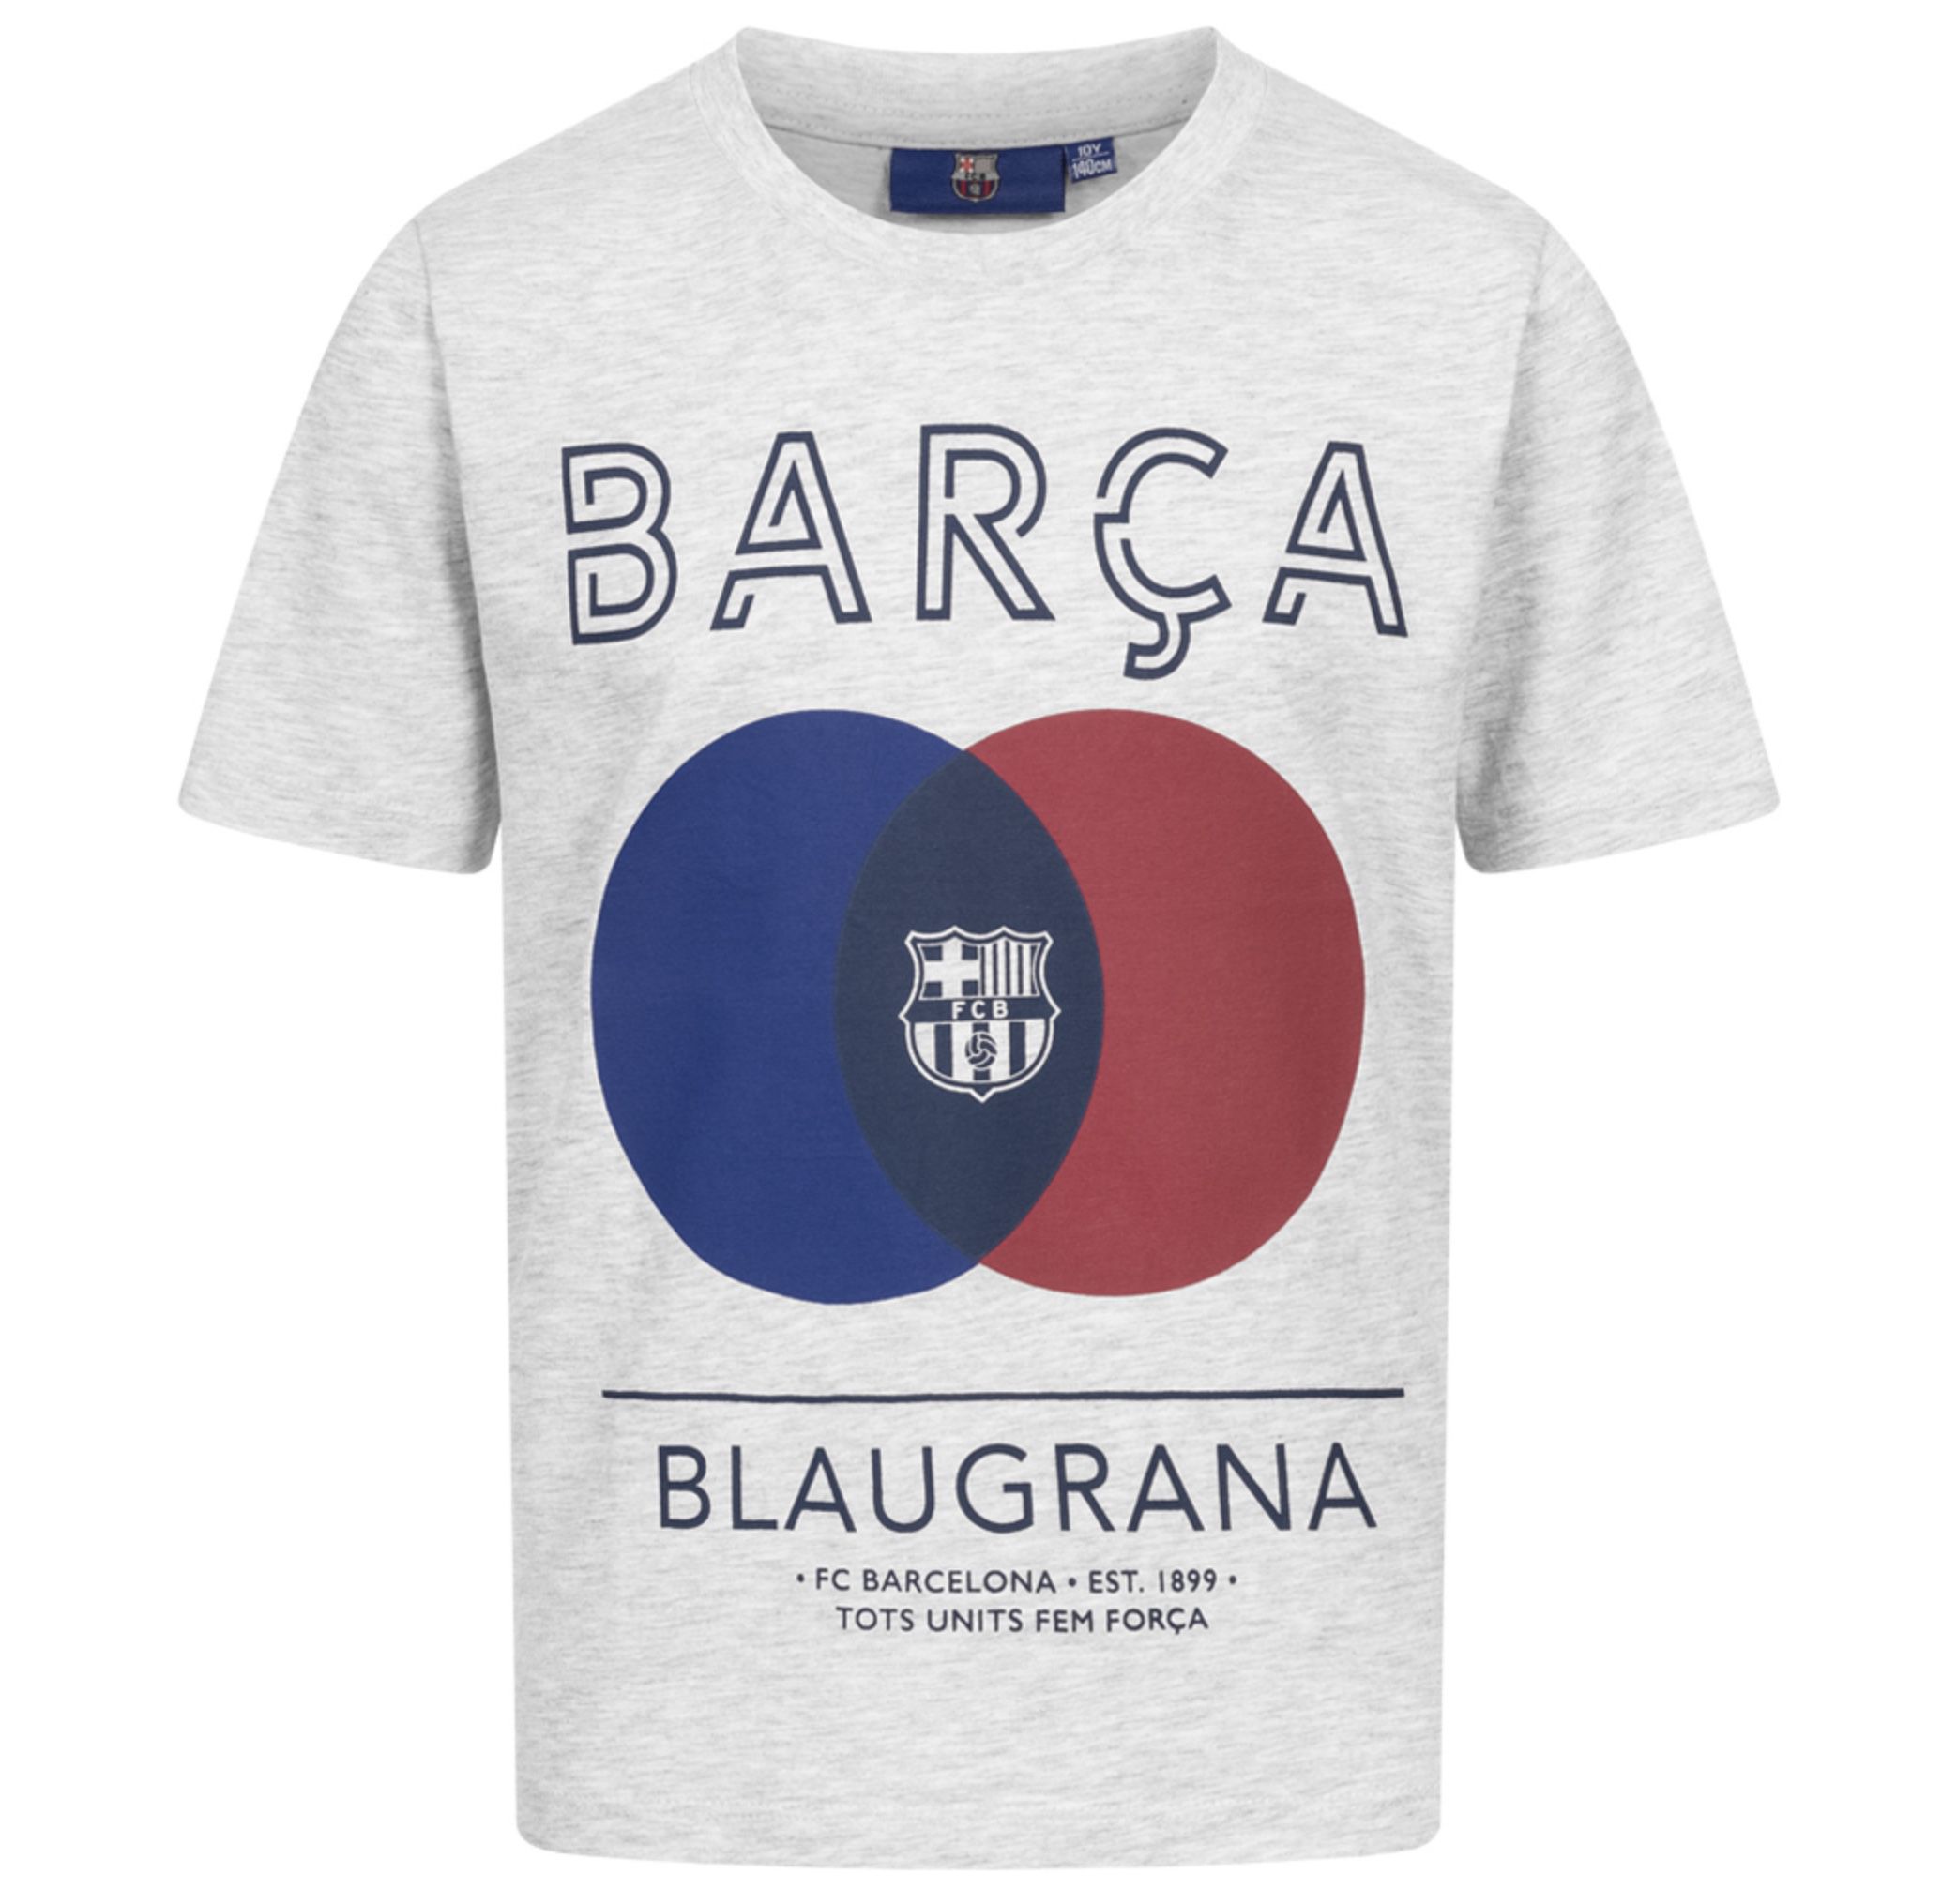 FC Barcelona Blaugrana Jungen T Shirt für 6€ (statt 10€)